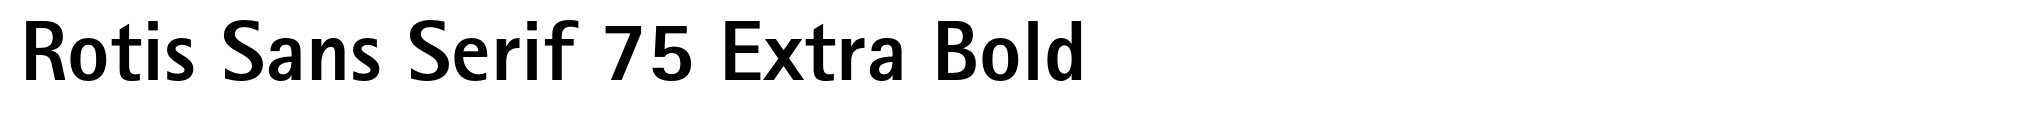 Rotis Sans Serif 75 Extra Bold image